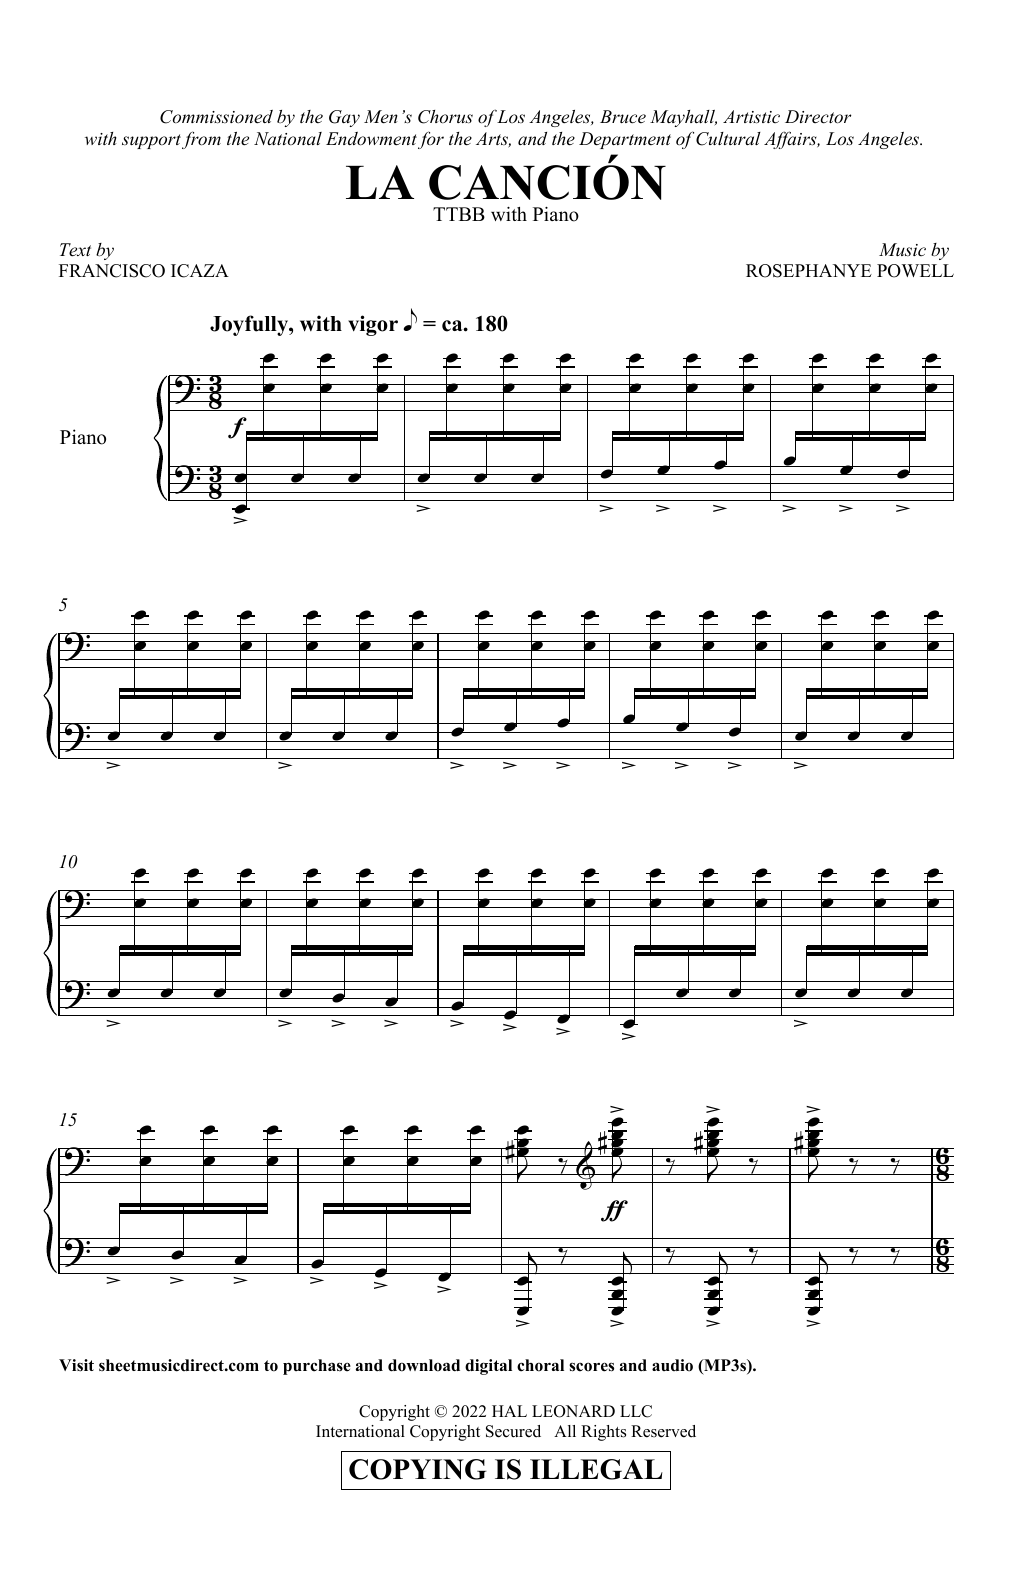 Rosephanye Powell La Canción Sheet Music Notes & Chords for TTBB Choir - Download or Print PDF